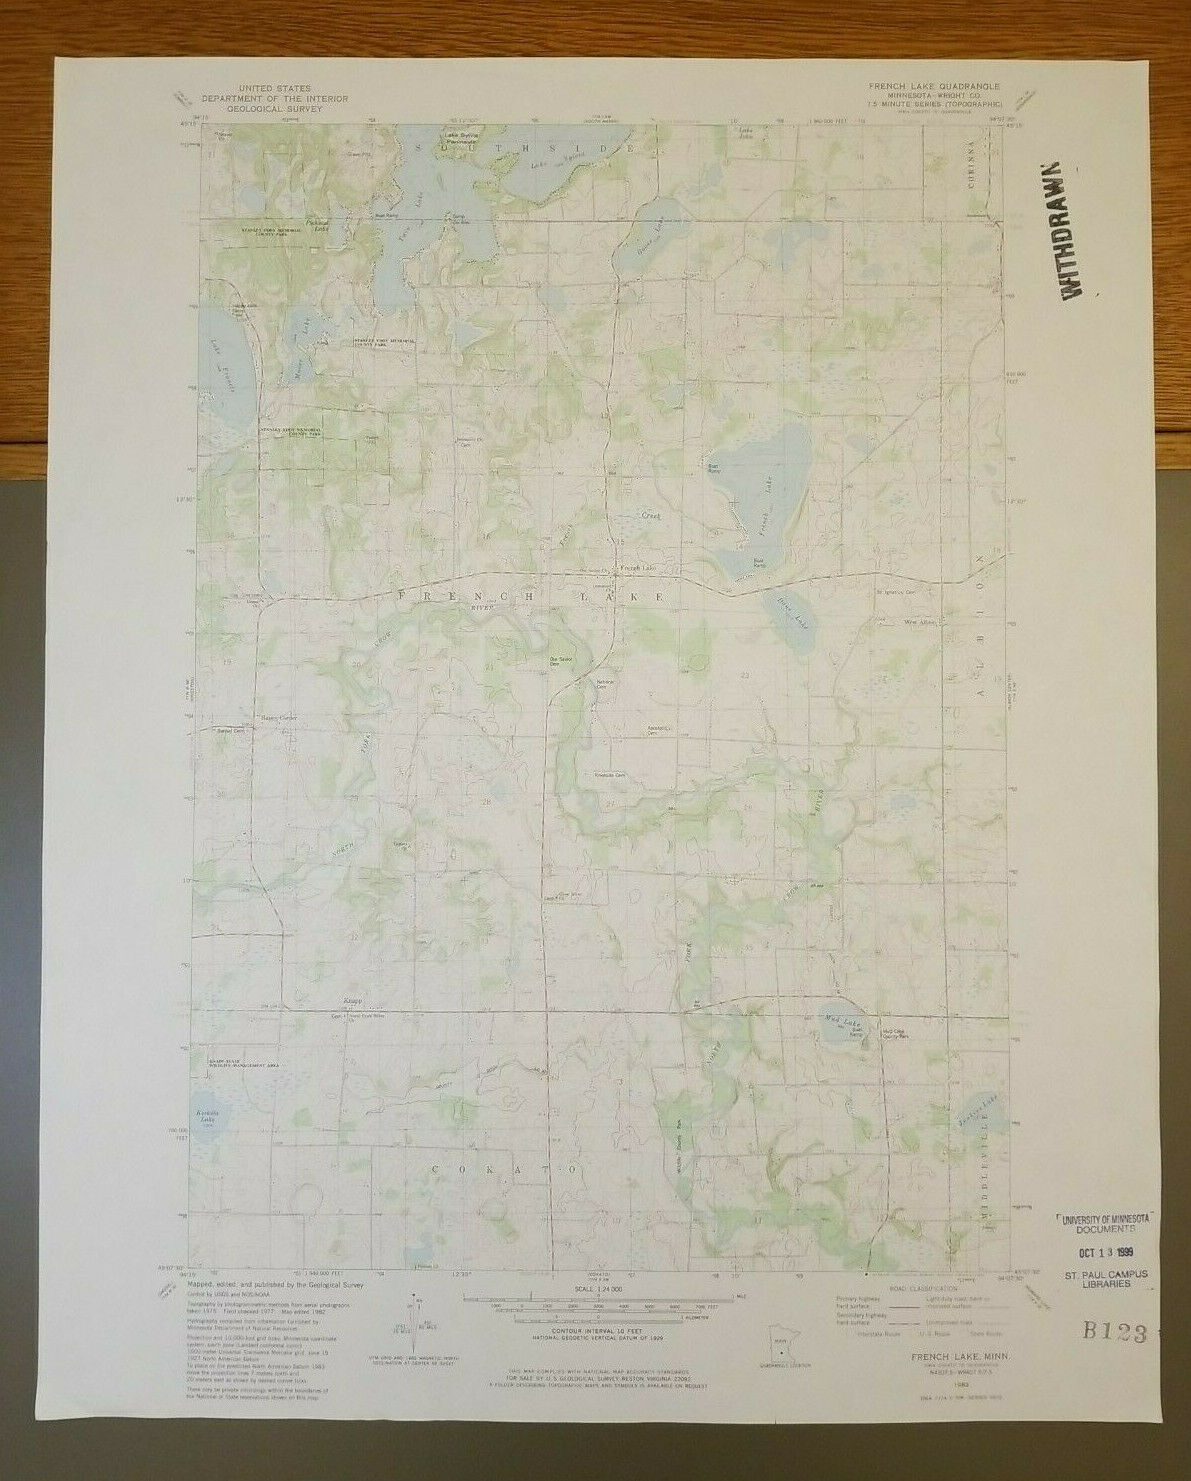 French Lake, Minnesota Original Vintage 1982 Usgs Topo Map 27" X 22"